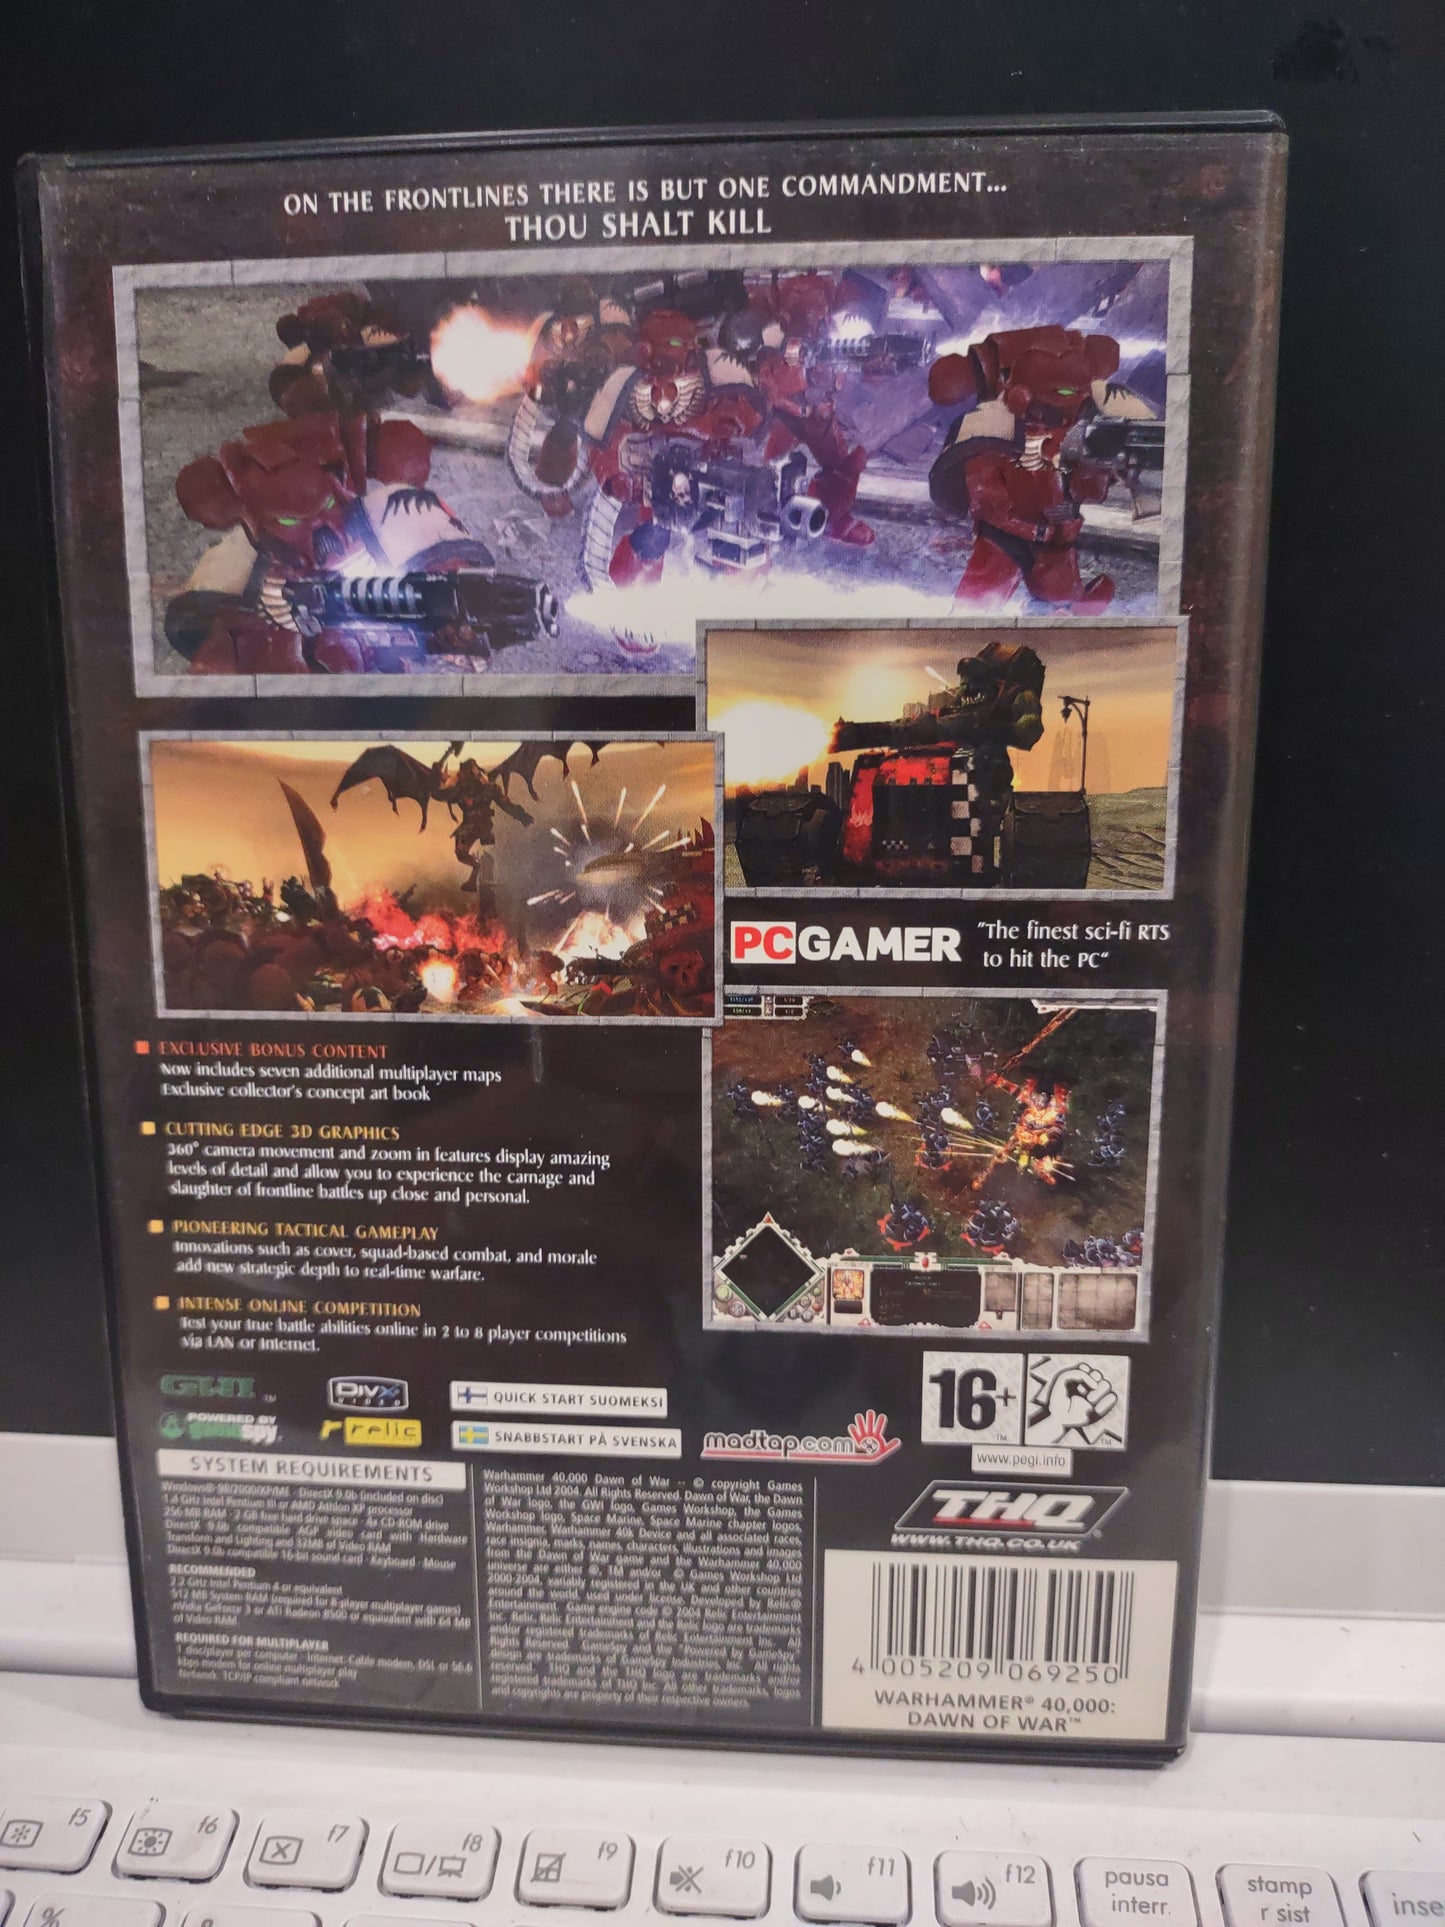 Gioco PC computer Warhammer dawn of war